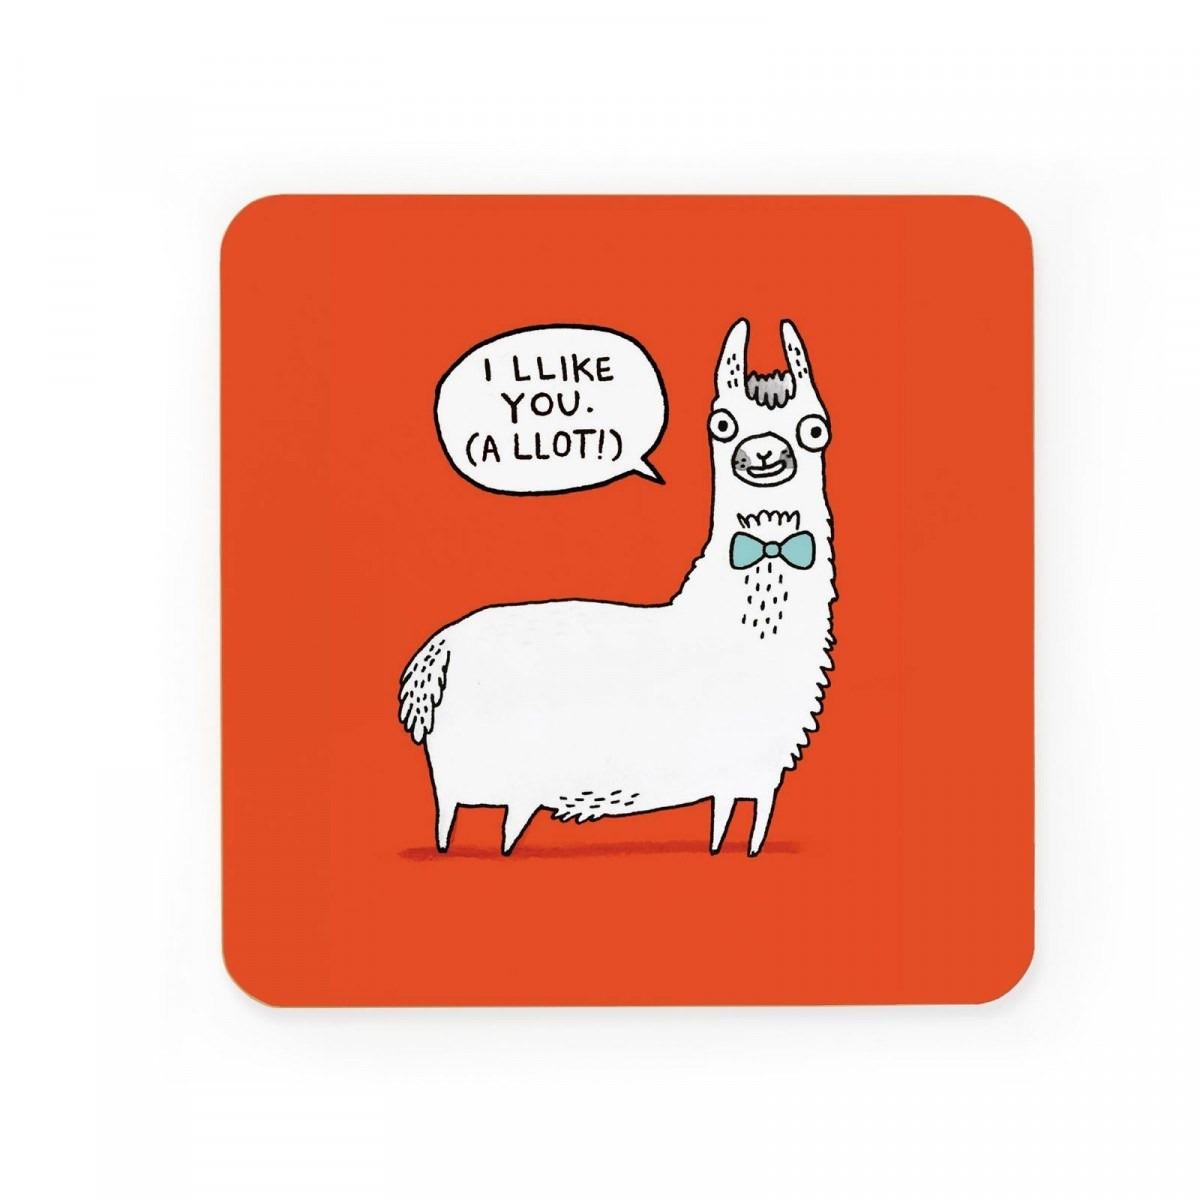 Llama Llikes You Coasters